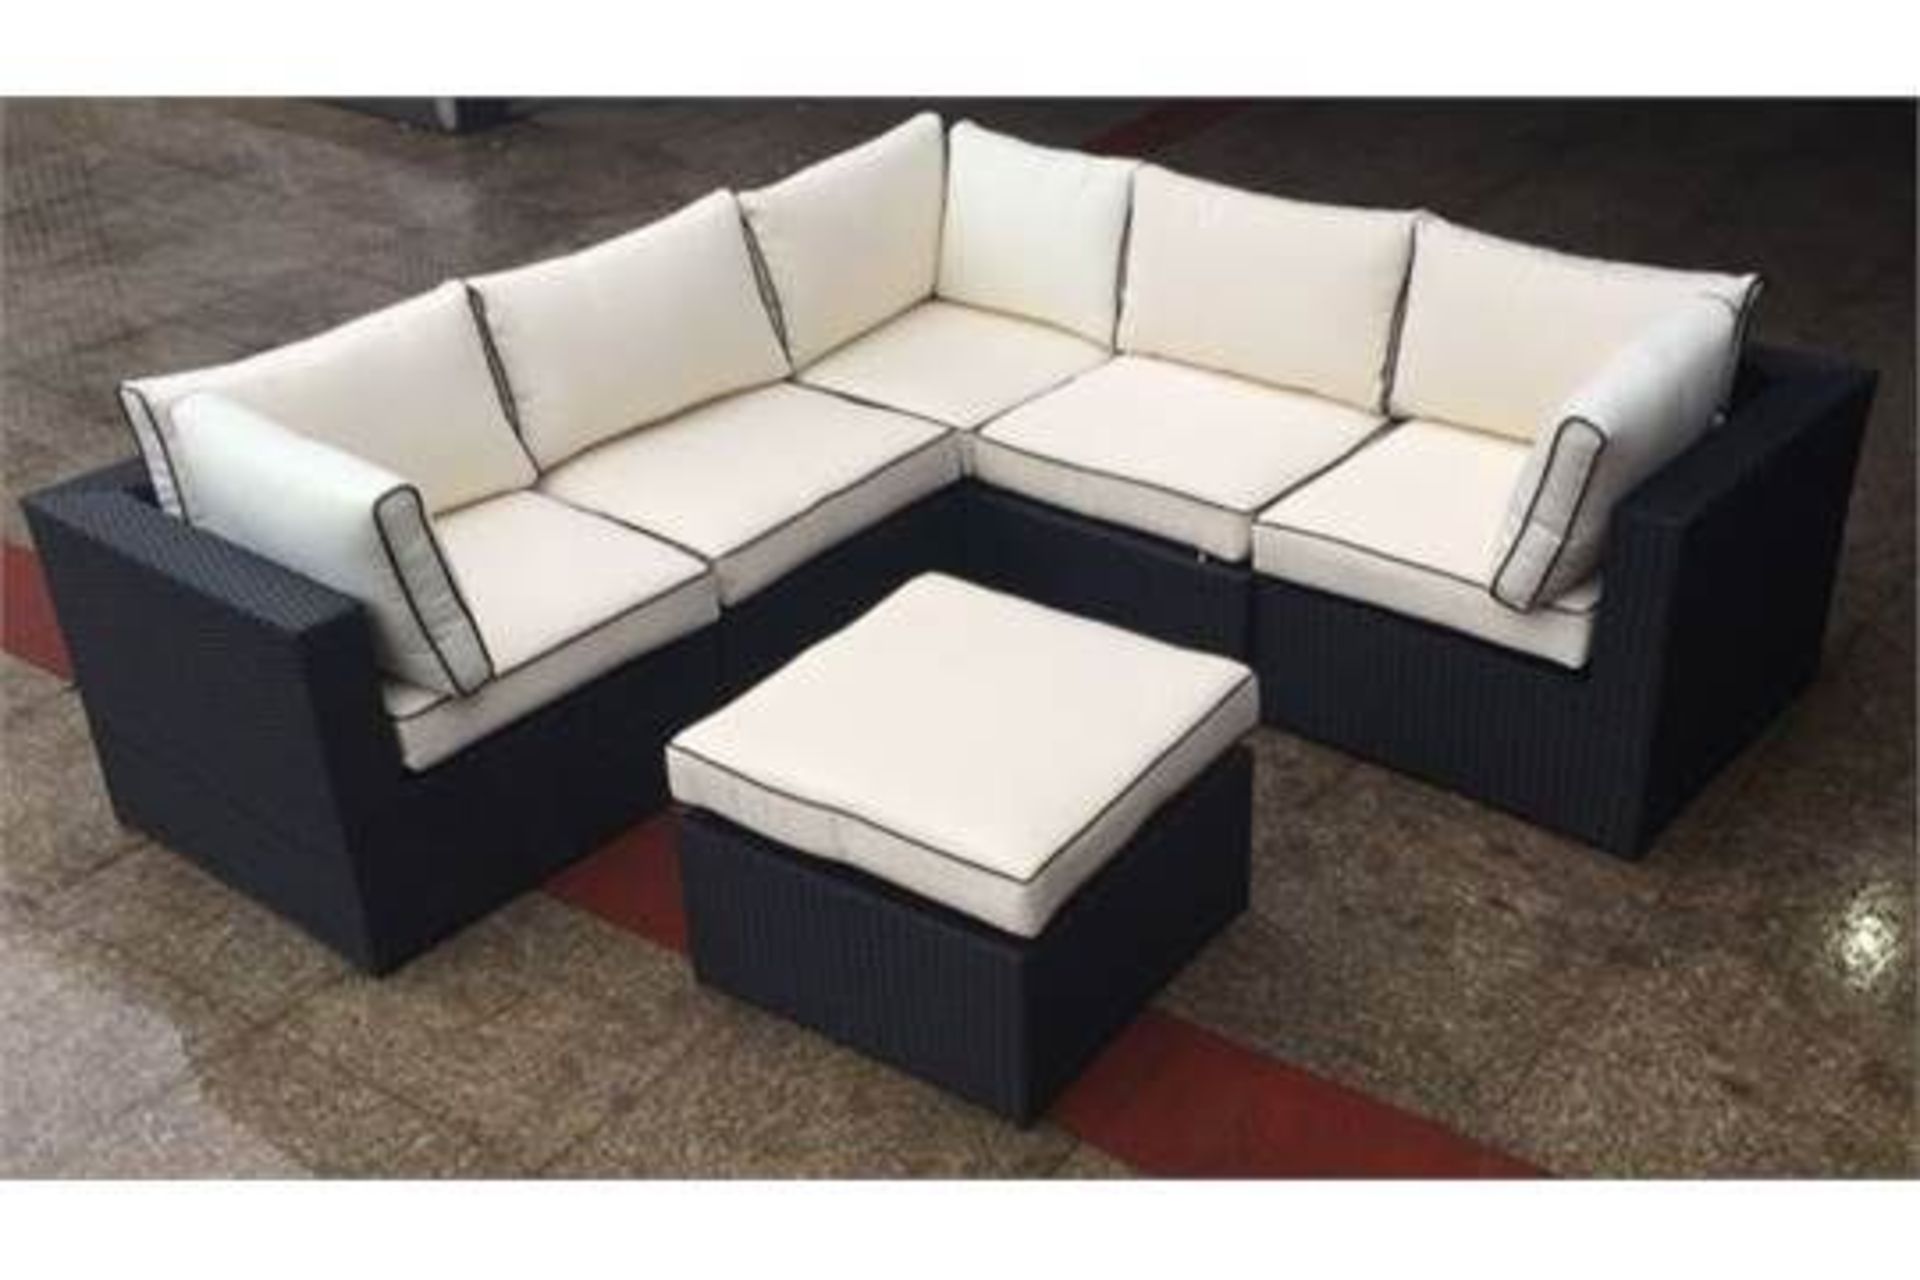 * The Floridita Outdoor Rattan Corner Sofa Set. online sale price £799 Brand New & Boxed. Gorgeous 6